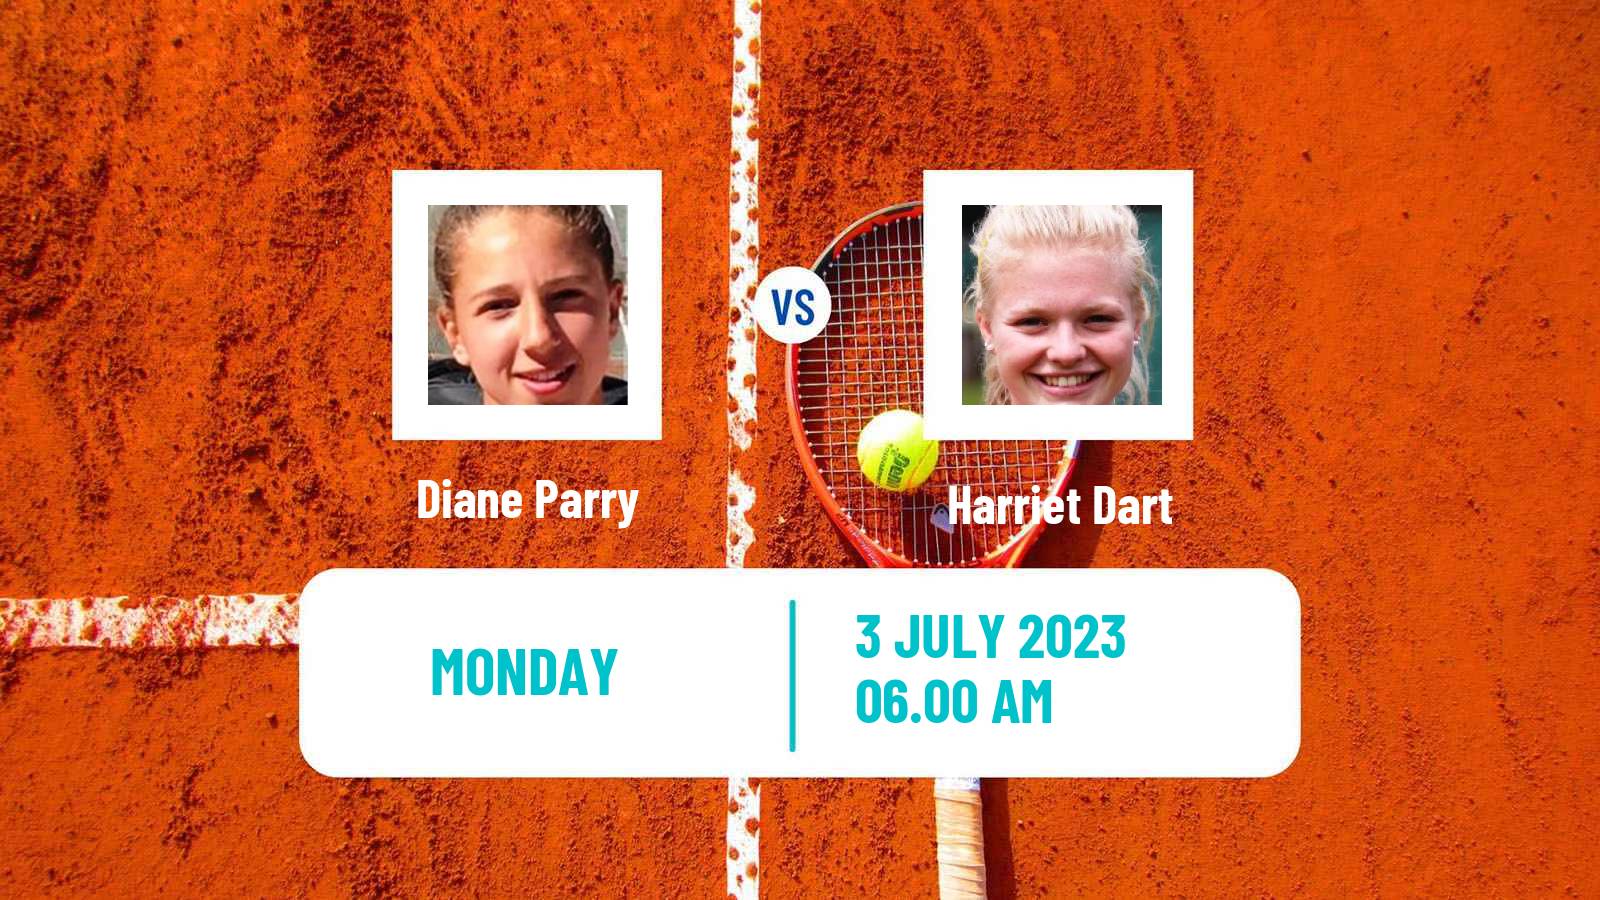 Tennis WTA Wimbledon Diane Parry - Harriet Dart